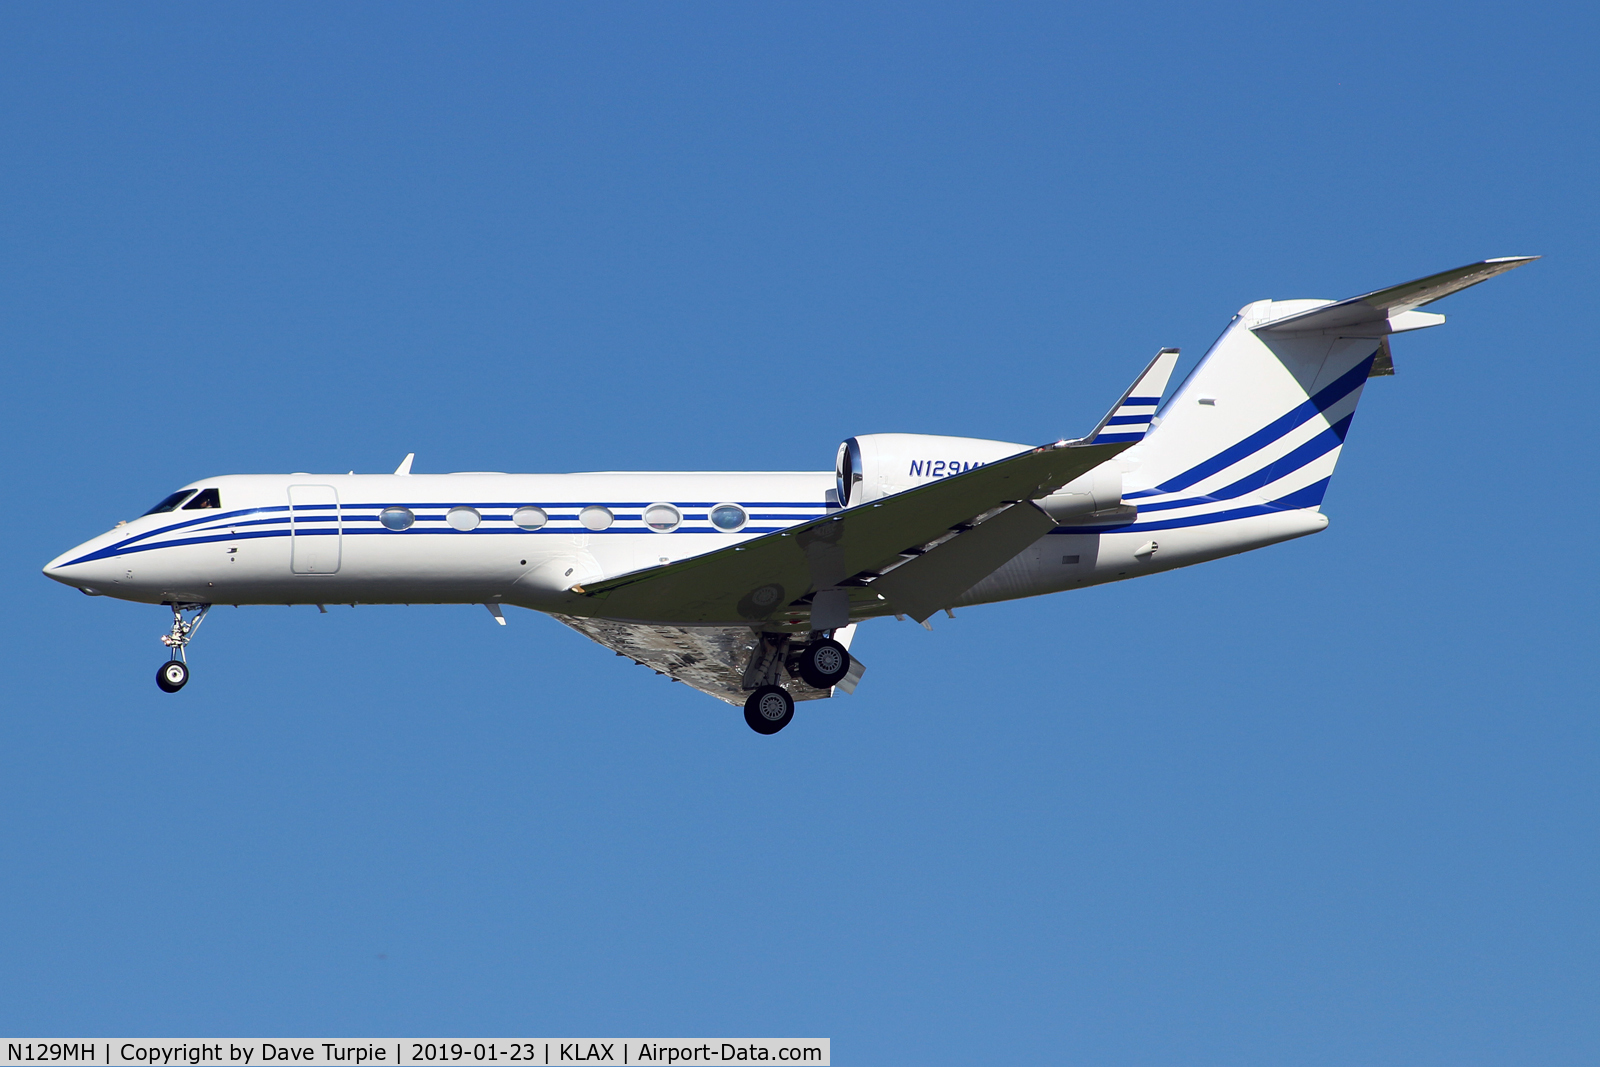 N129MH, 2003 Gulfstream Aerospace G-IV C/N 1517, No comment.